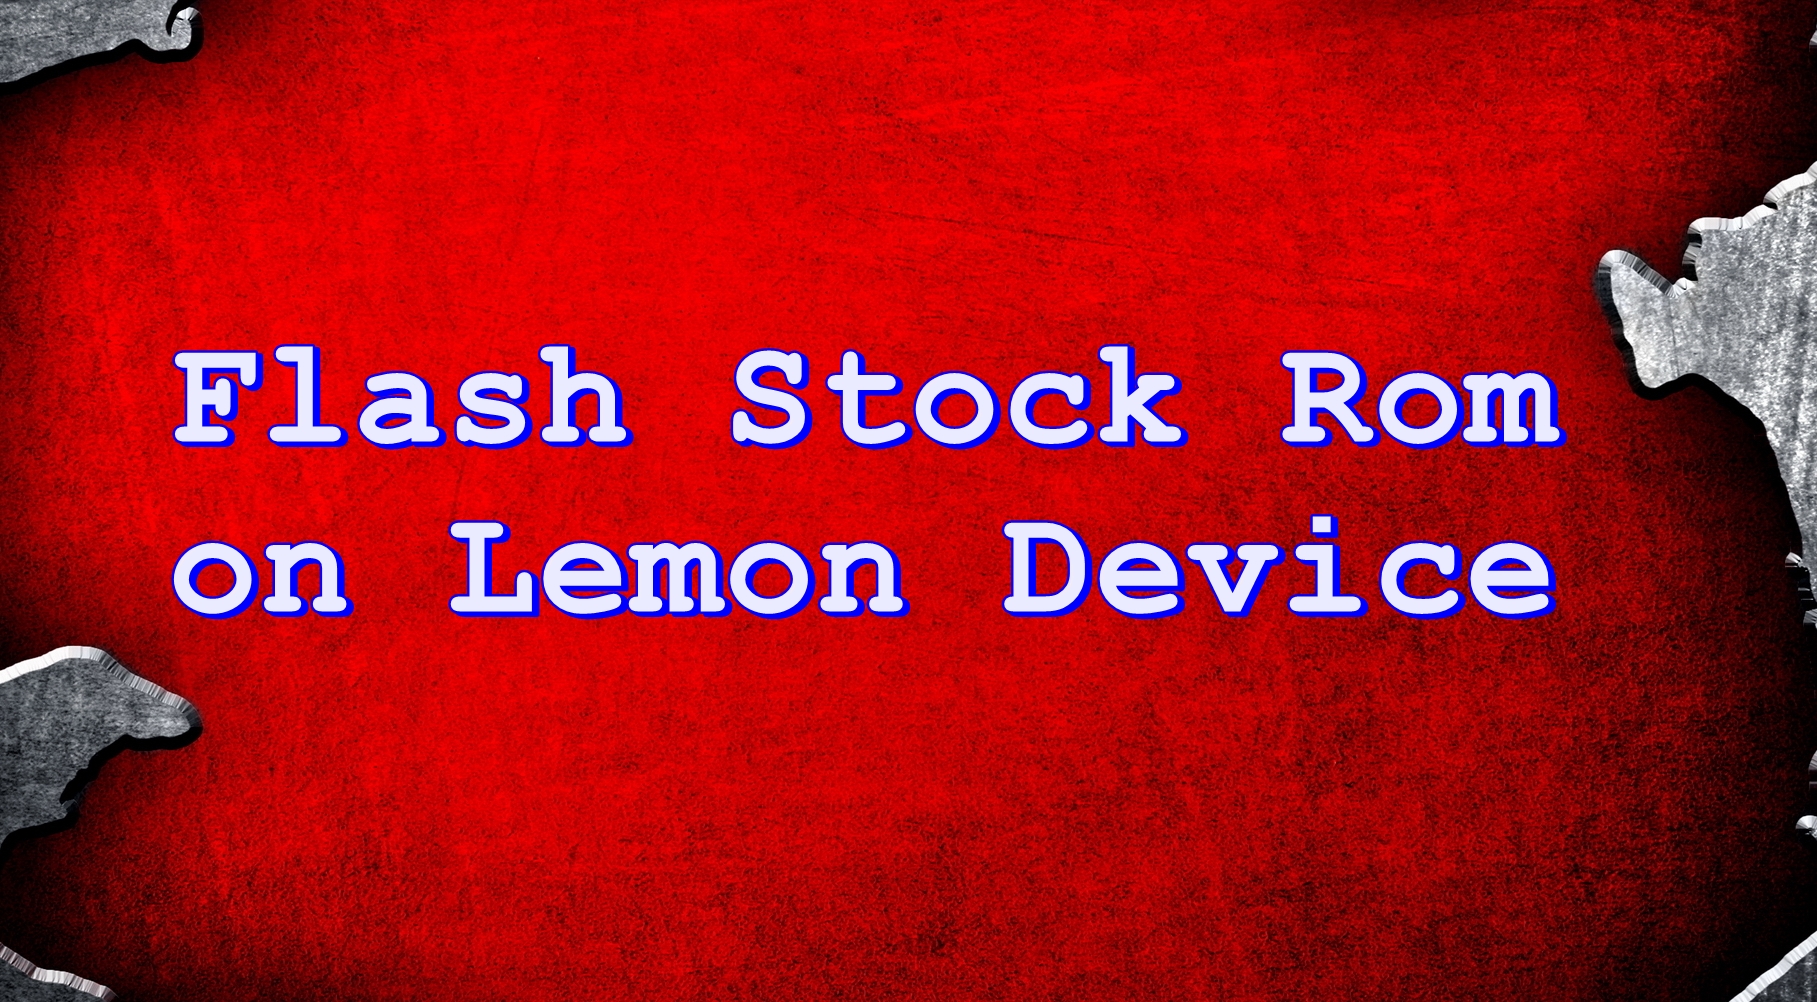 Flash Stock Rom on Lemon